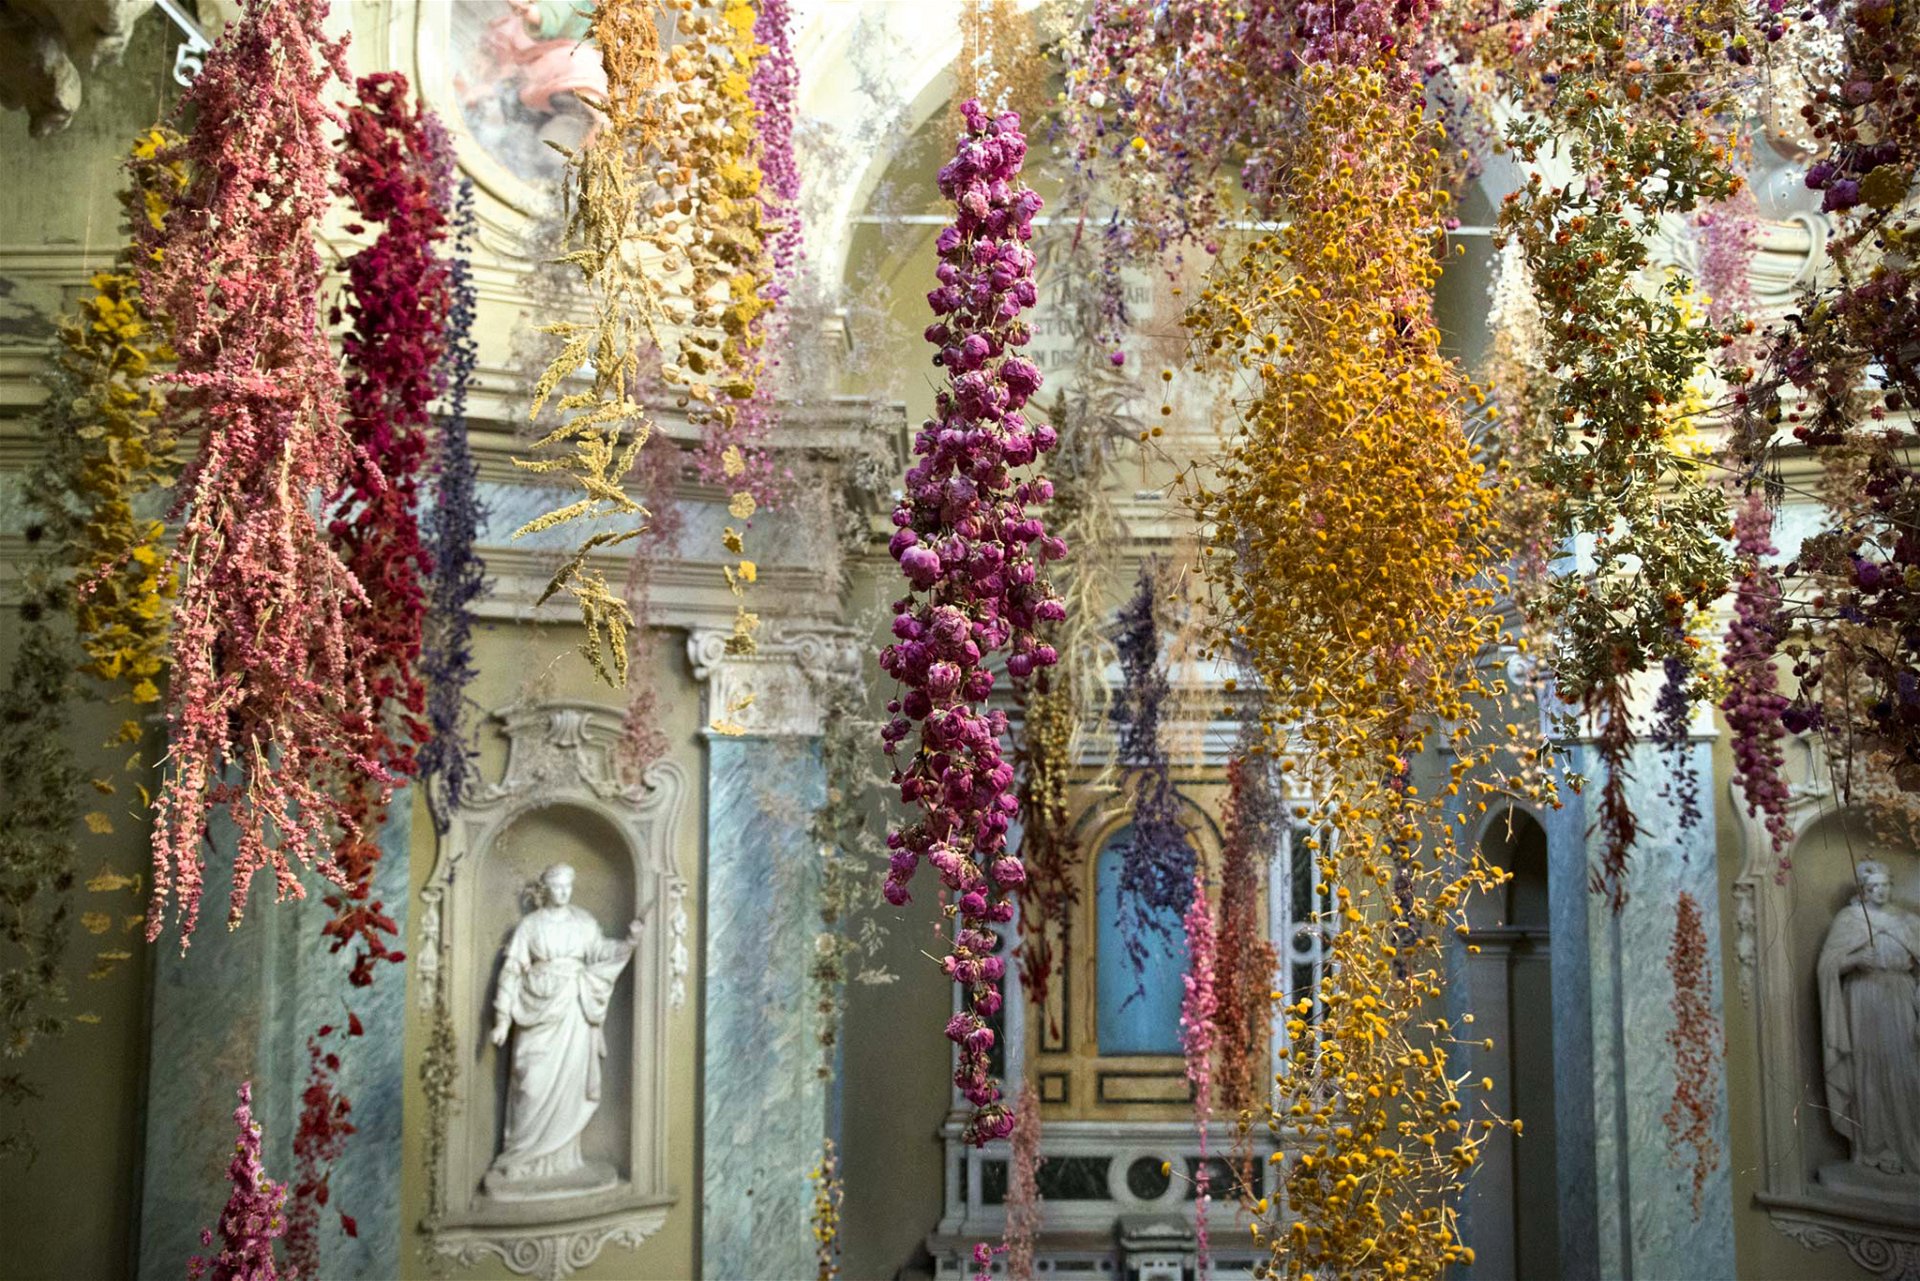 Ein Baldachin aus Duft Rebecca Louise Laws wunderbare Blüteninstallation »Florilegium« schmückte die Chiesa di San Tiburzio in Parma. rebeccalouiselaw.com